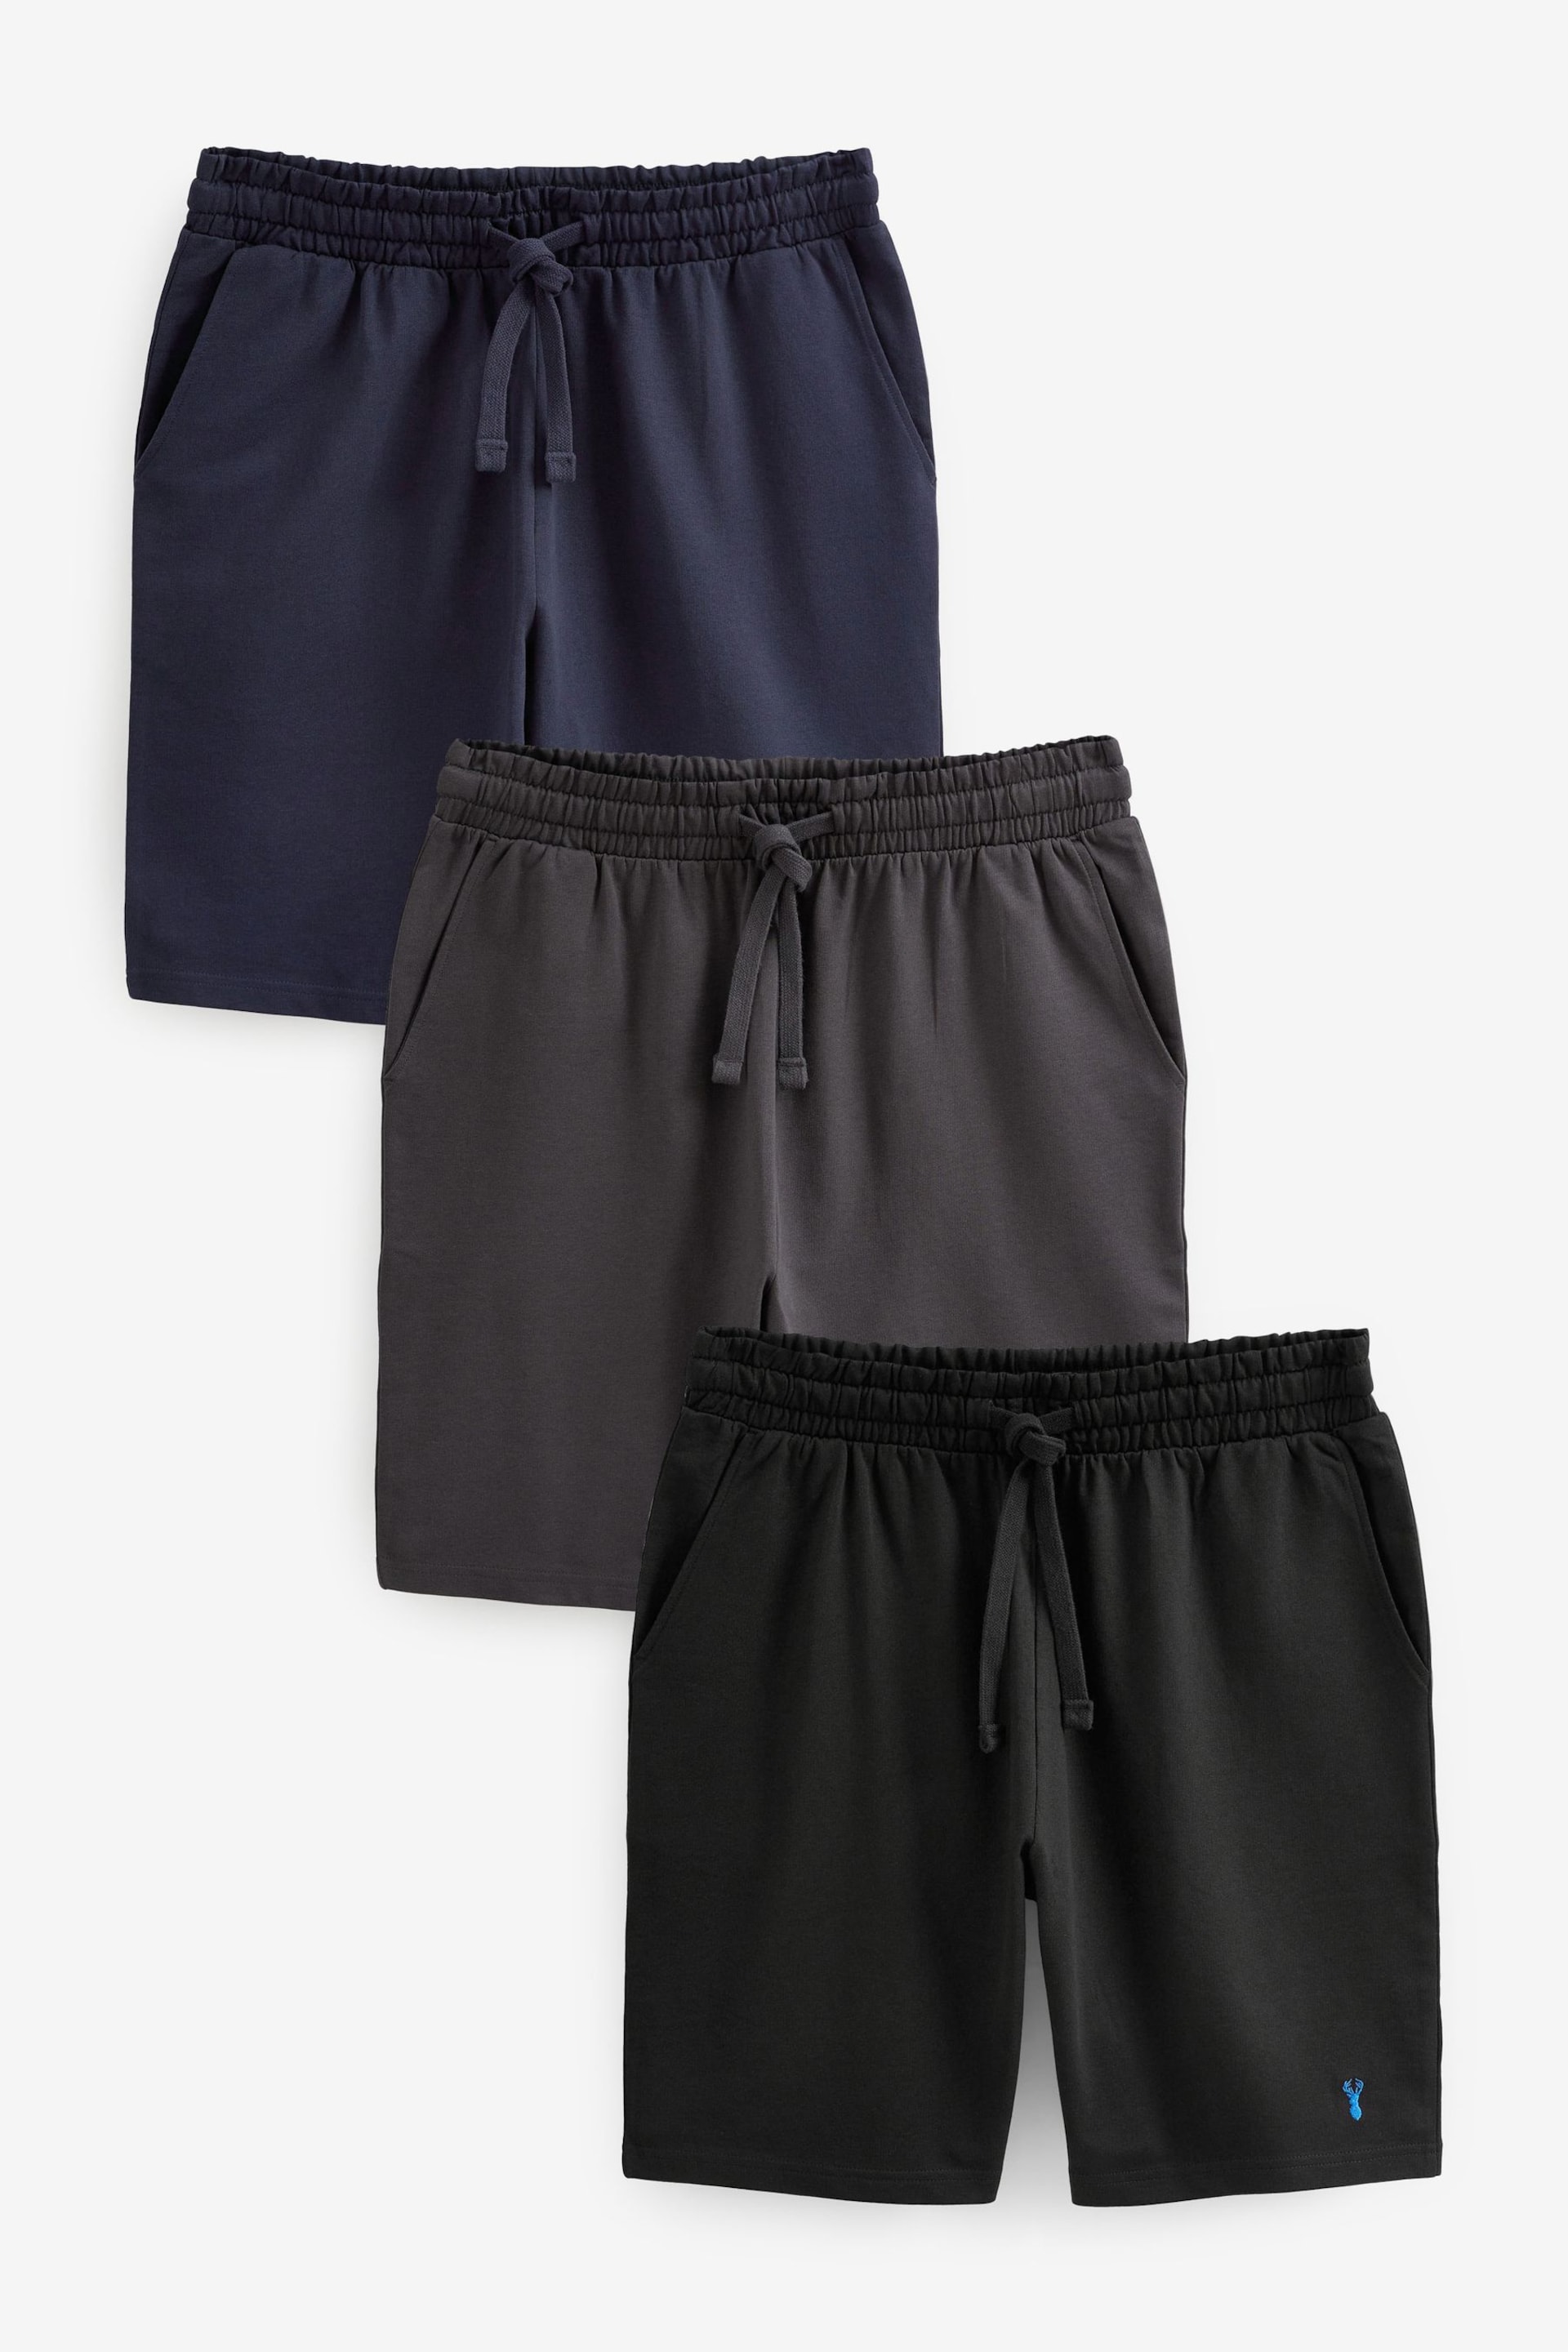 Navy Blue/Grey/Black Lightweight Shorts 3 Pack - Image 1 of 15